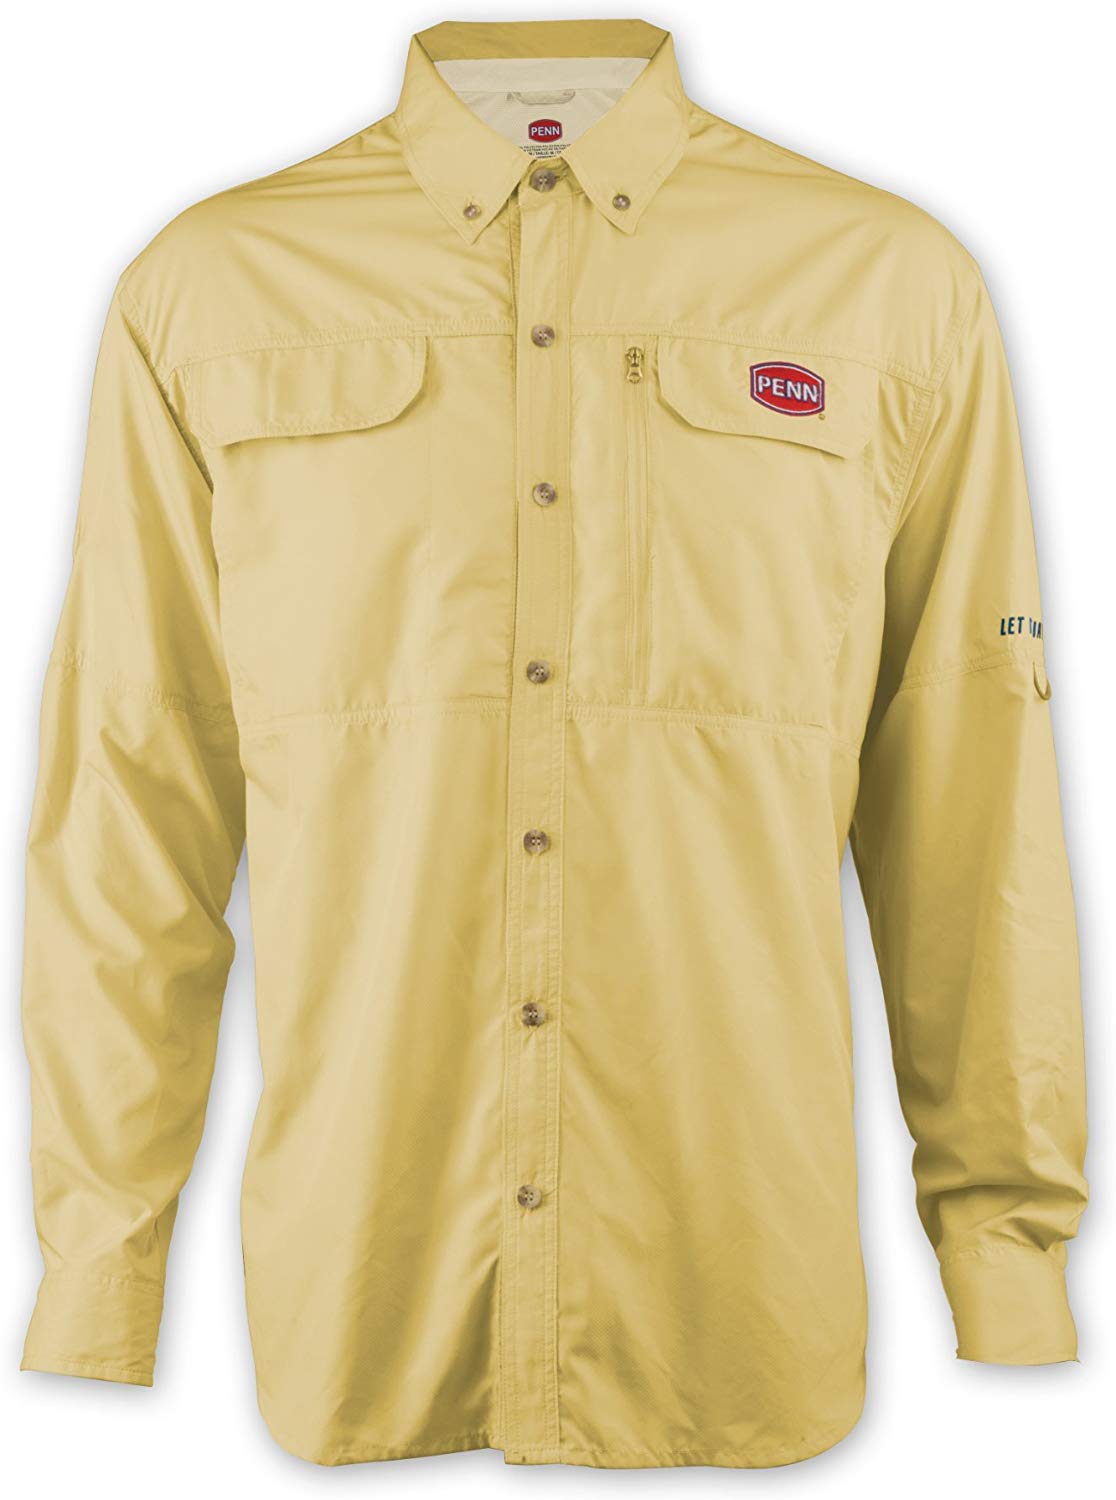 Penn Fishing Long Sleeve Button Down Yellow Performance Shirt, Vented